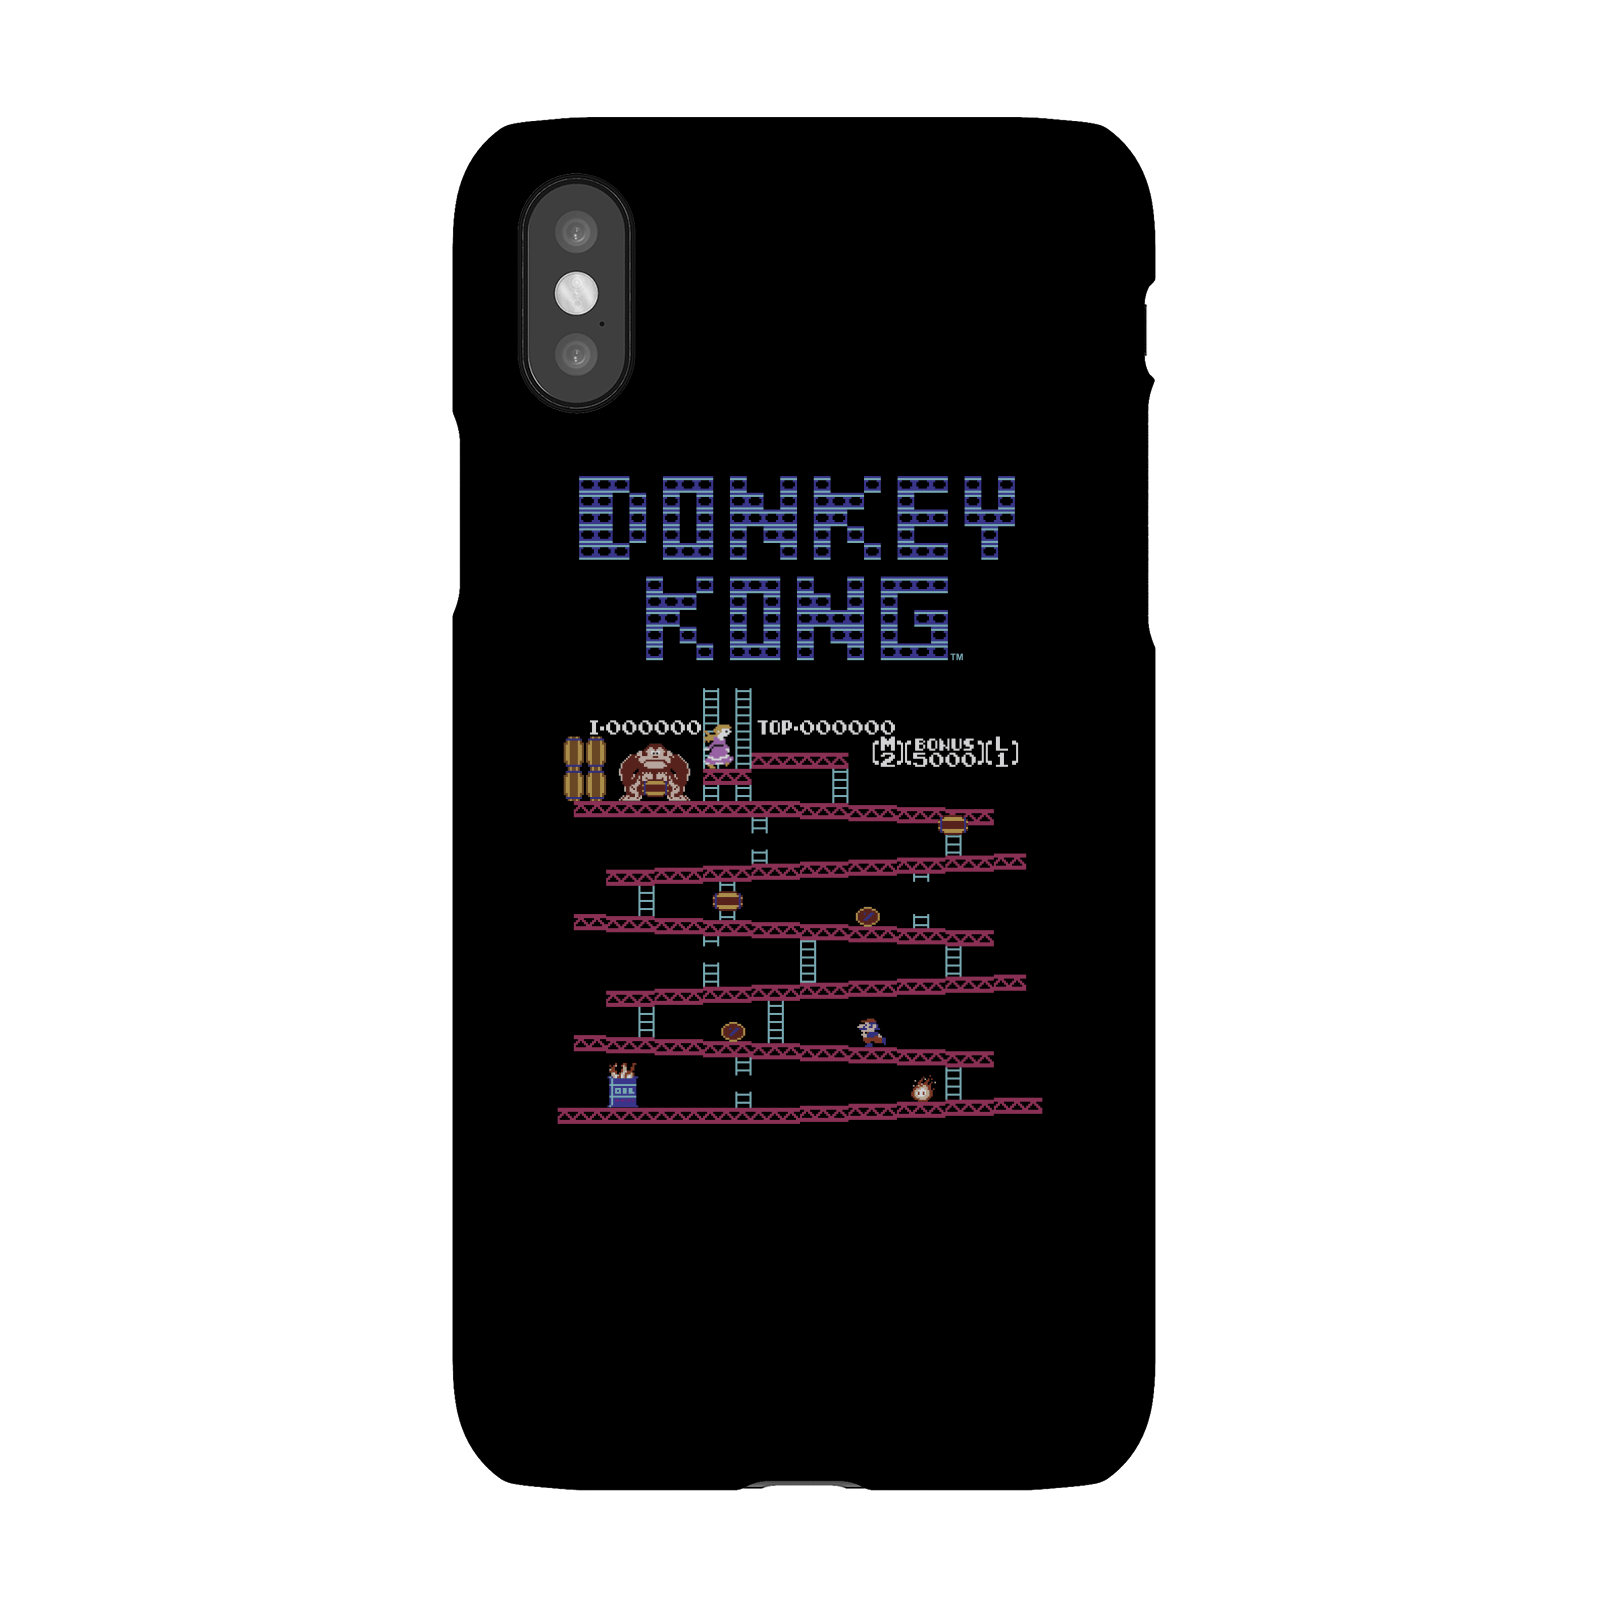 Nintendo Donkey Kong Retro Phone Case - iPhone X - Snap Case - Matte